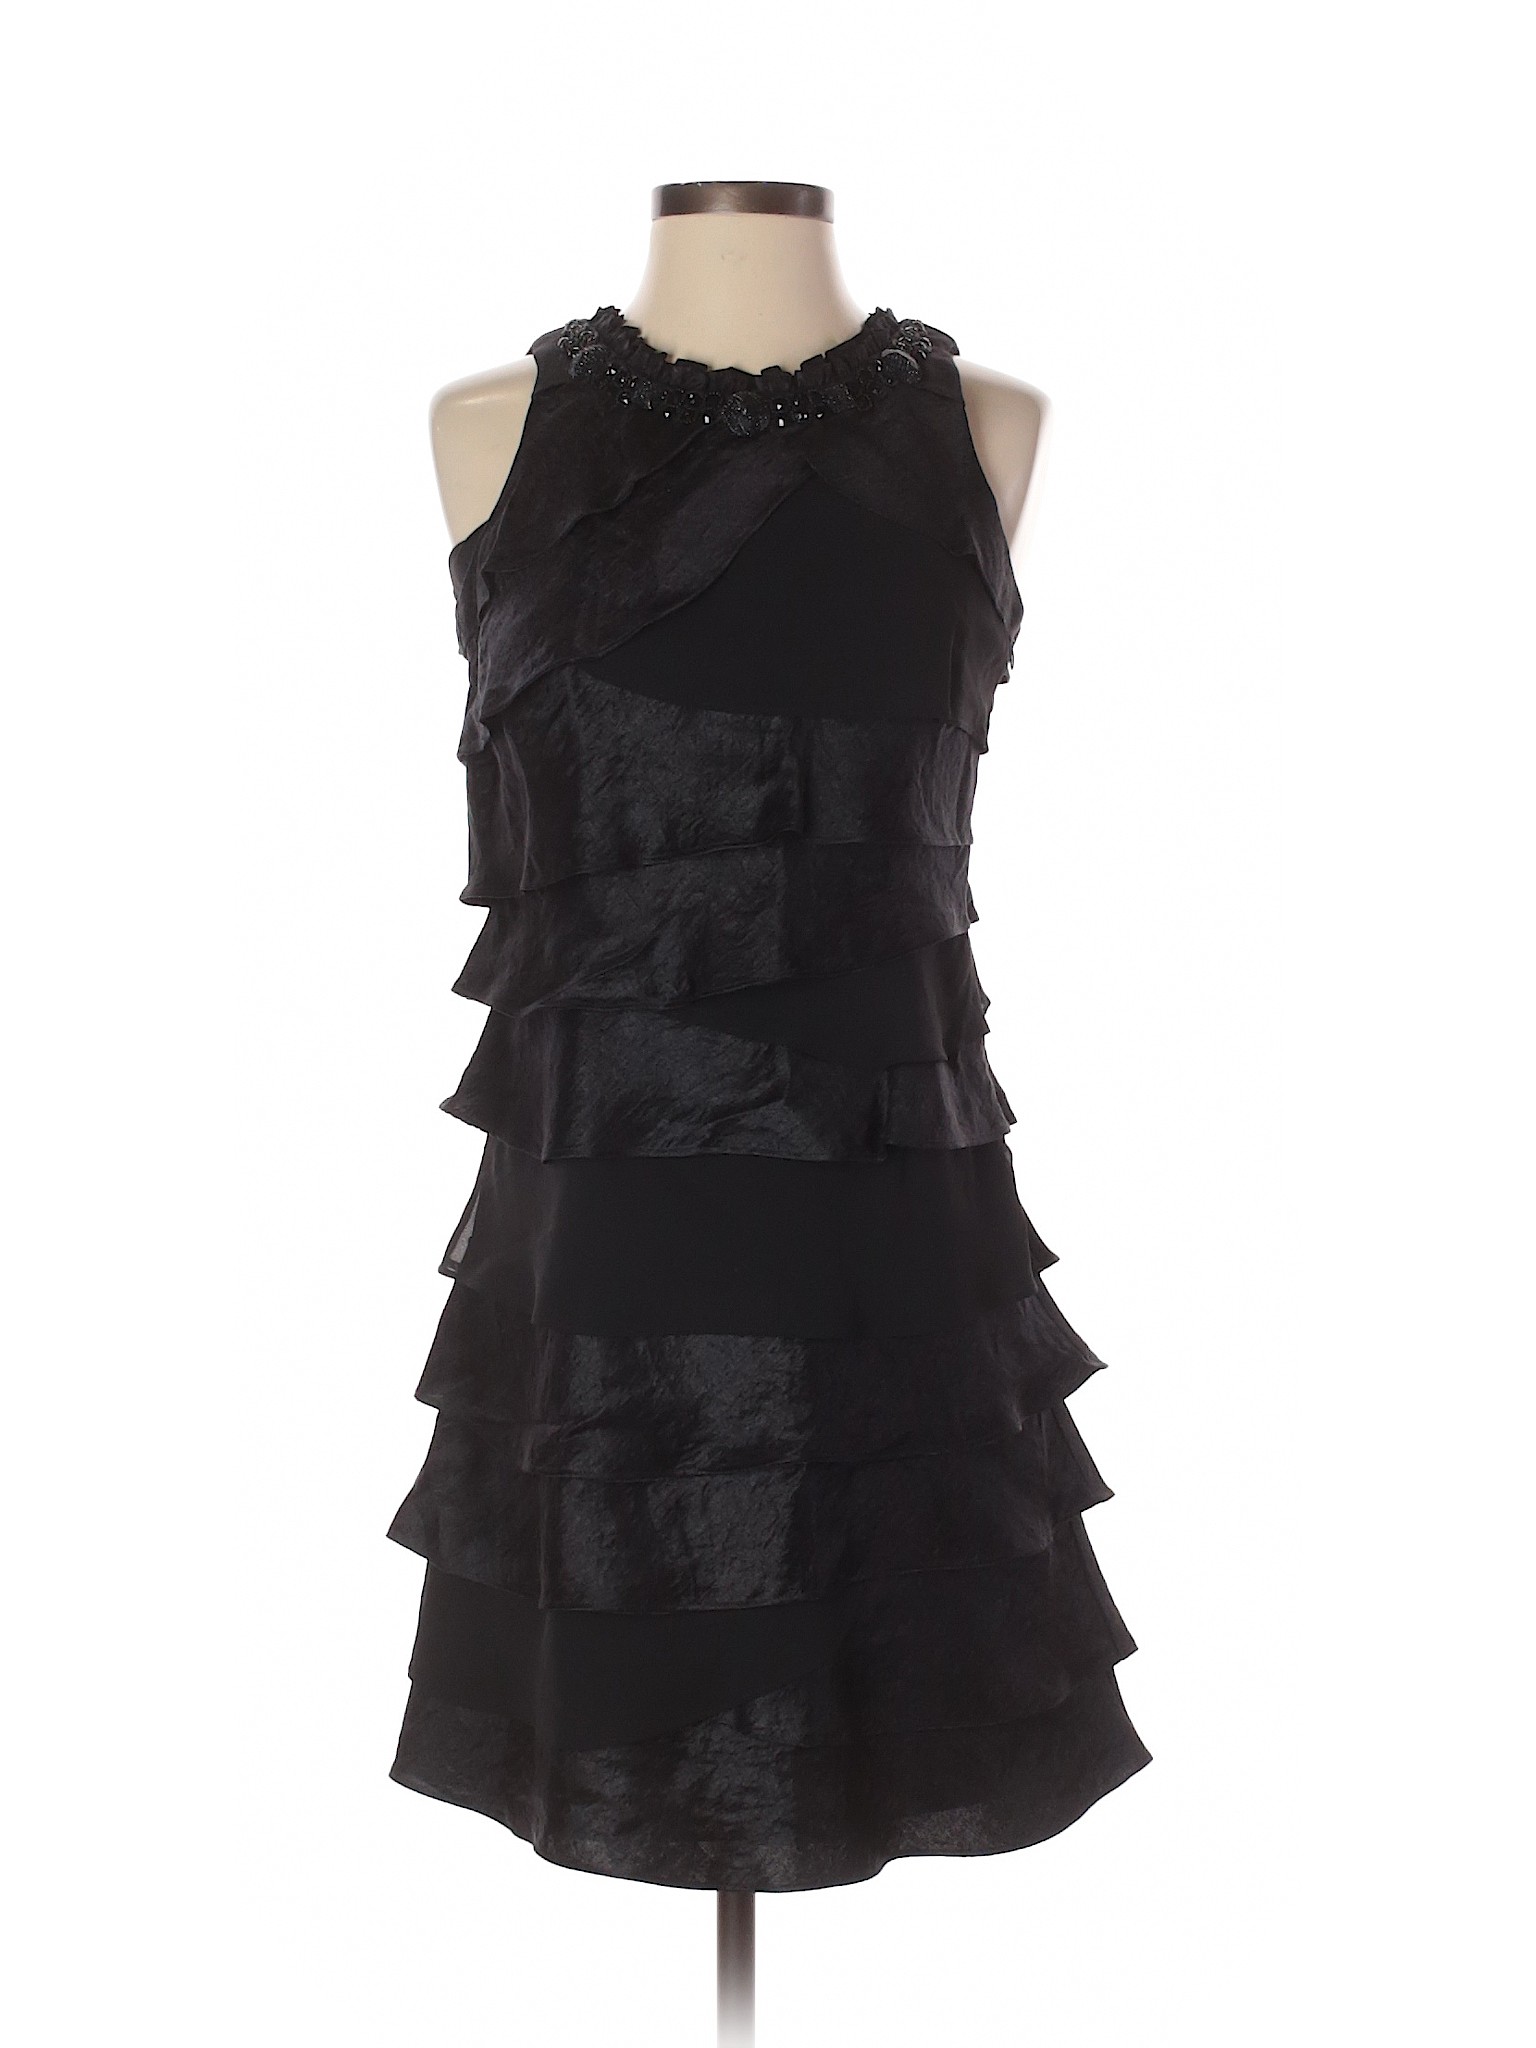 S.L. Fashions Women Black Cocktail Dress 4 Petites | eBay